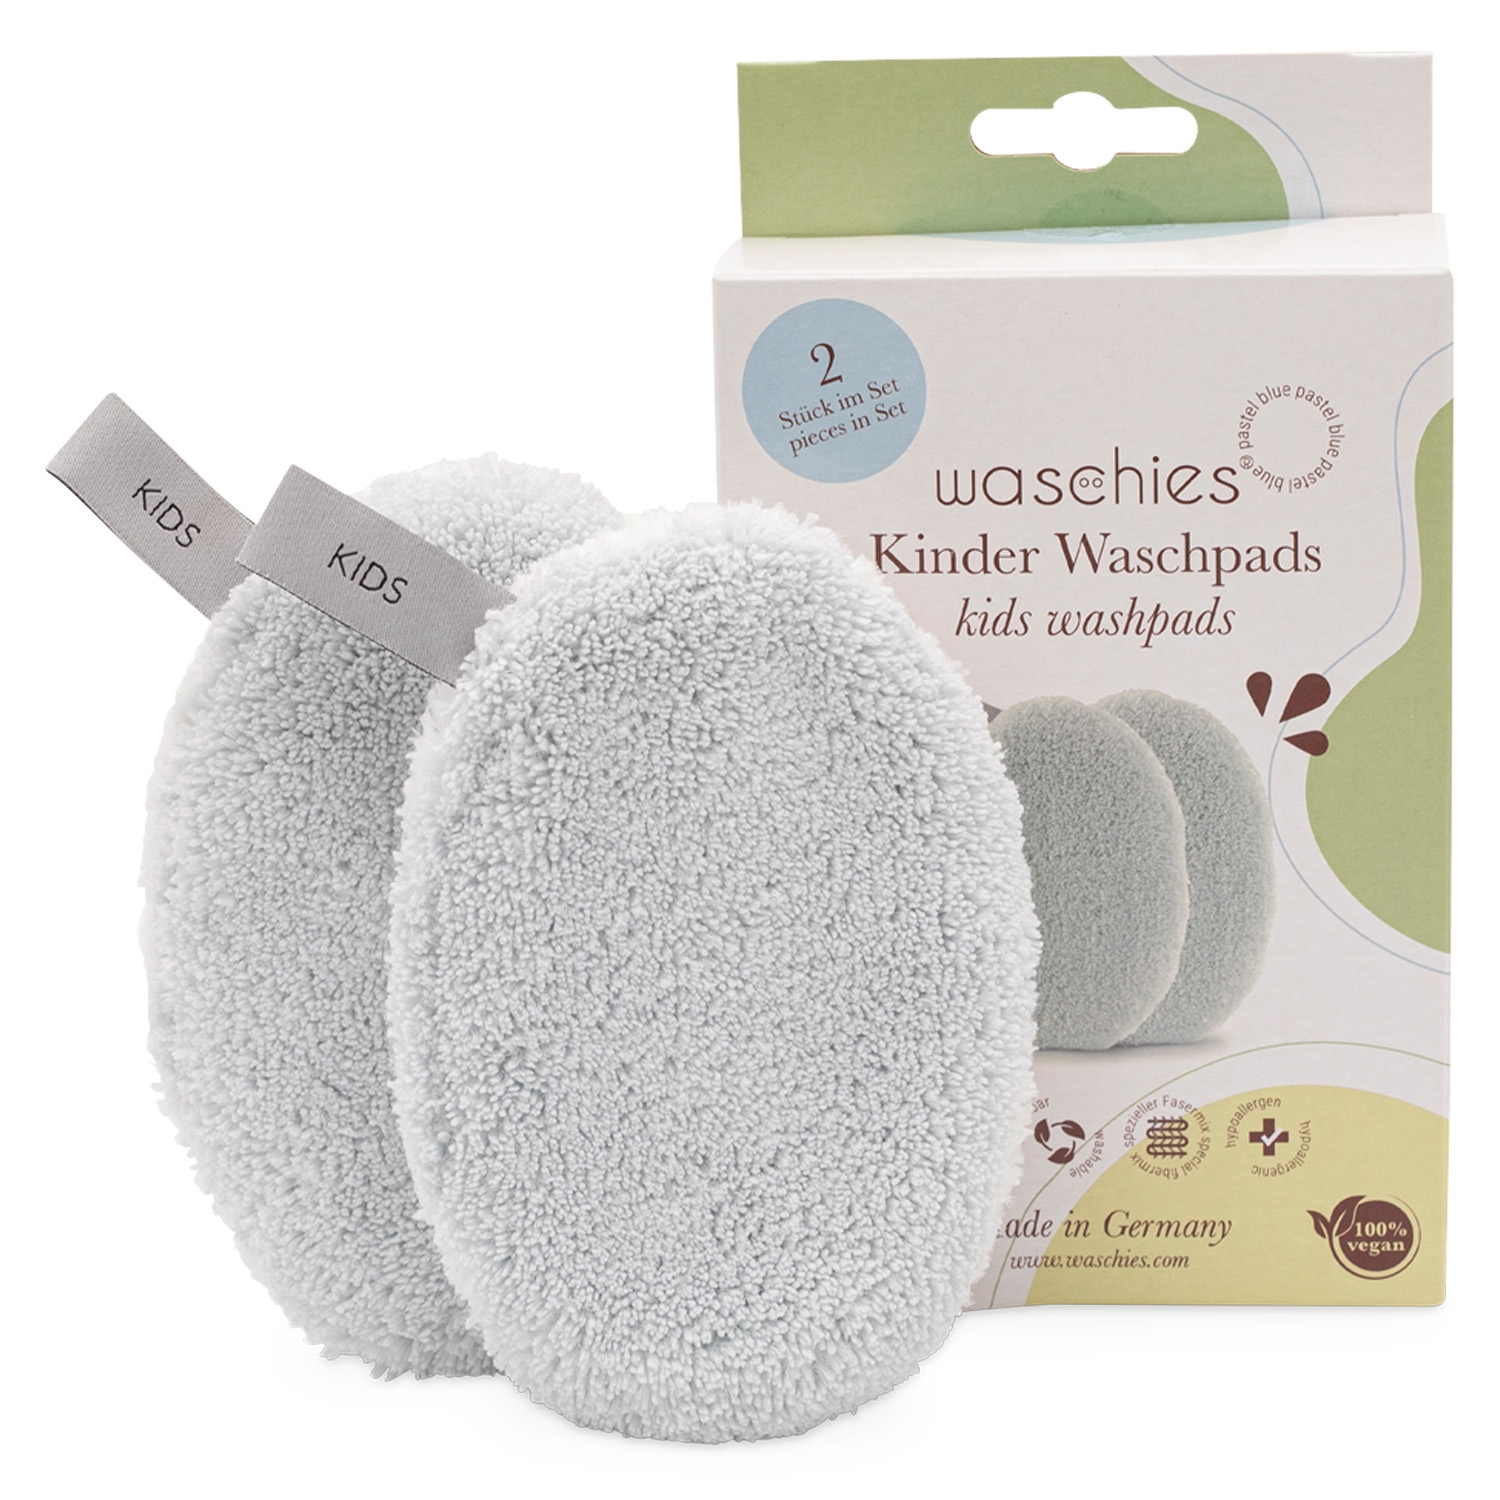 Product image from Waschies Kidsline - Waschpads für Babys & Kinder Pastel Blue Edition